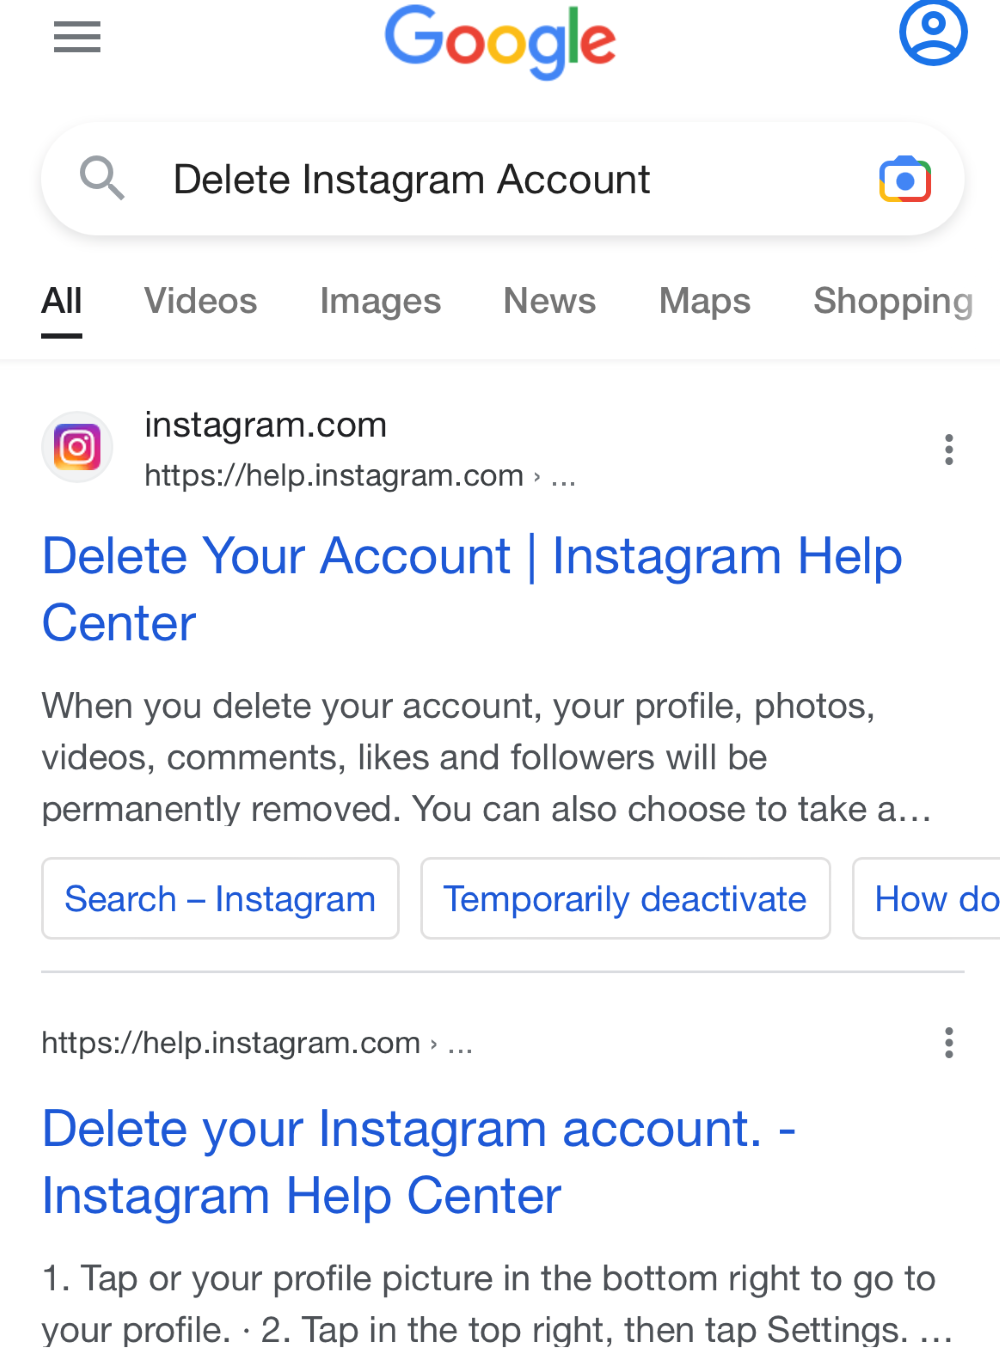 Delete Your Account on Instagram Help Center